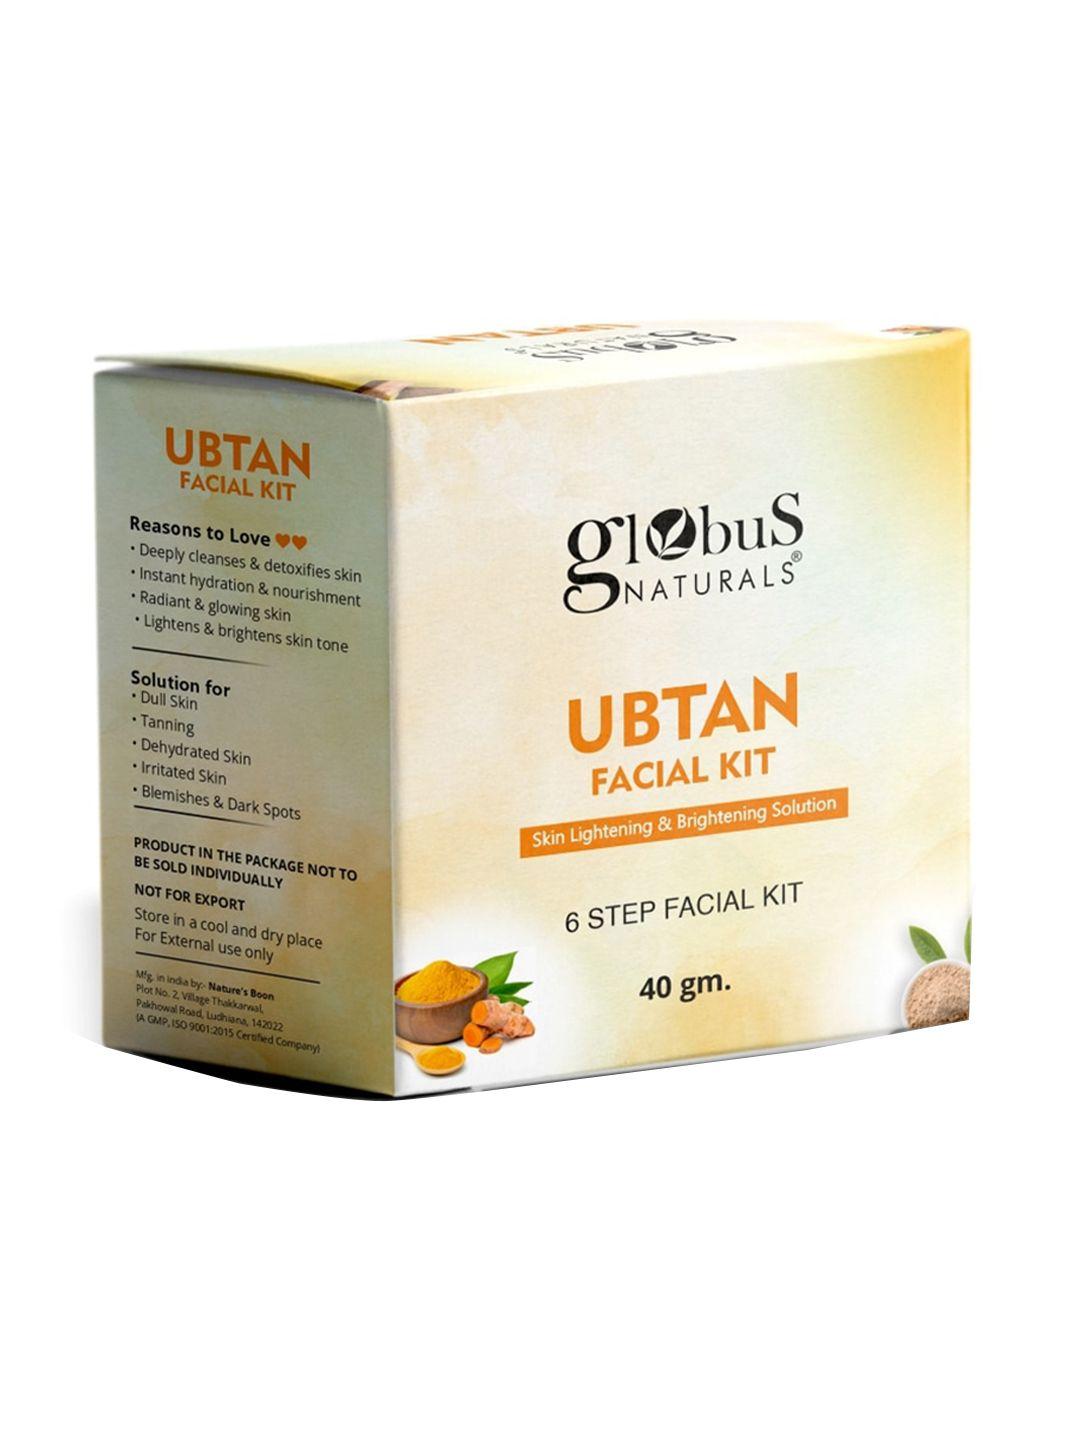 globus naturals ubtan 6 step facial kit for skin lightening - 40 g